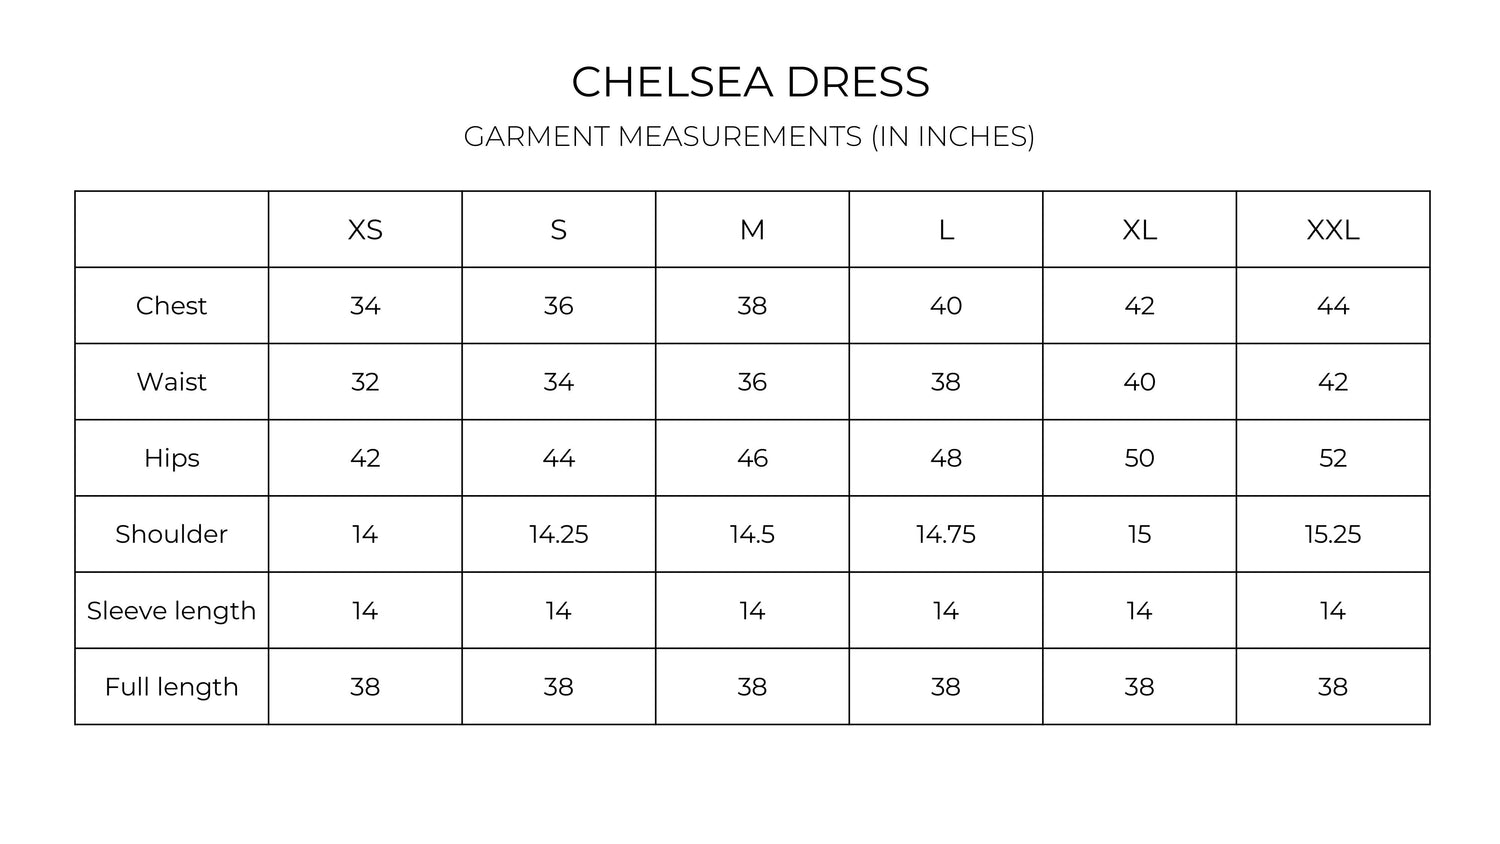 Chelsea Dress